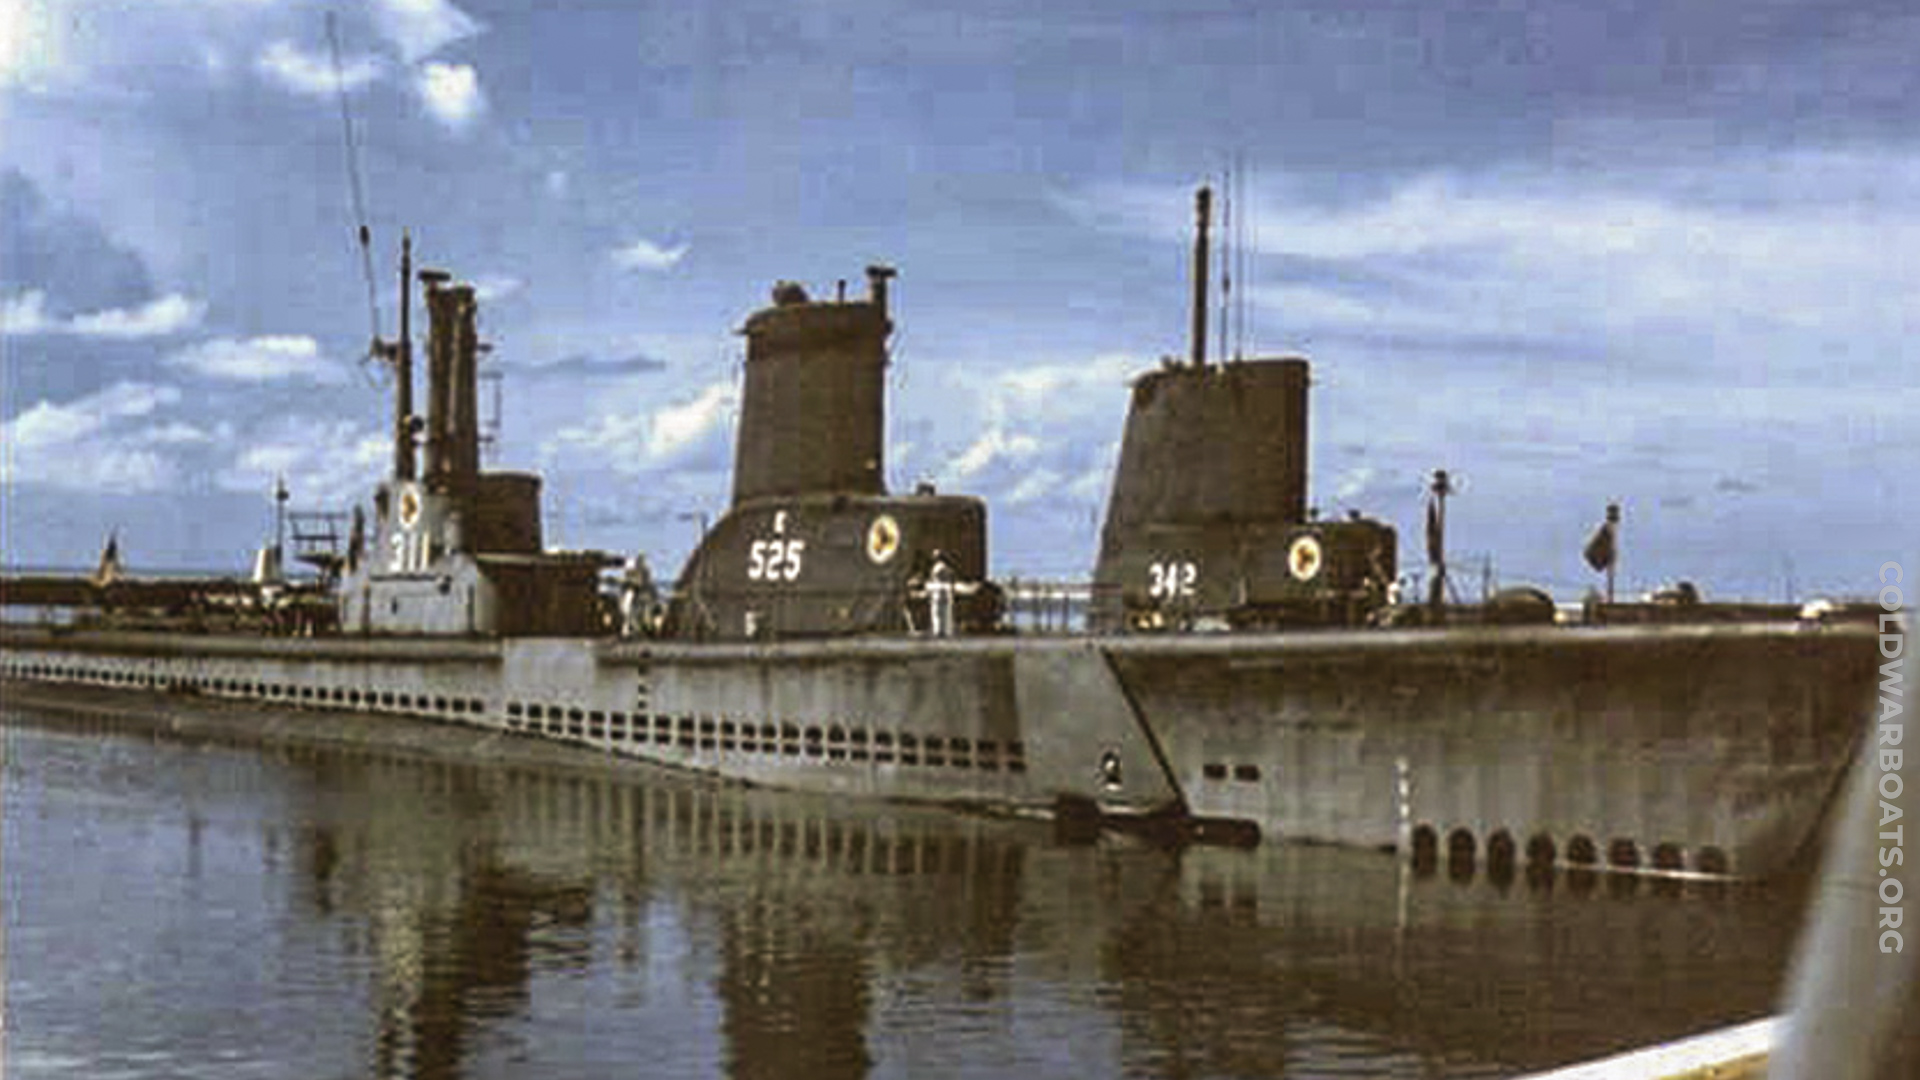 USS GRENADIER (SS 525) center, USS ARCHERFISH (SS 311) left, and USS CHOPPER (SS 342) right